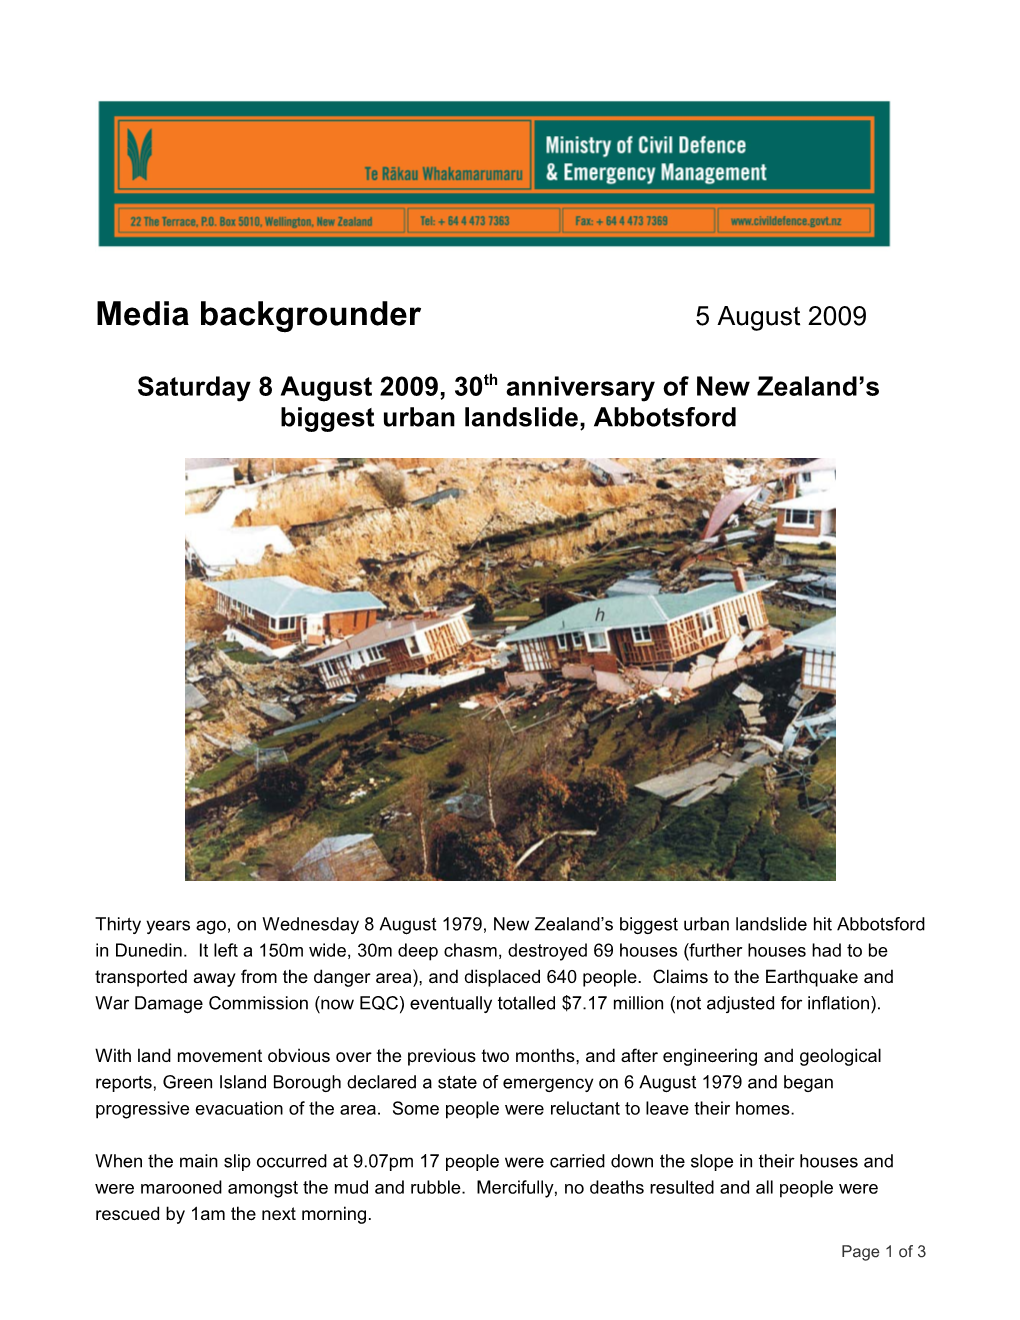 Saturday 8 August 2009, 30Th Anniversary of New Zealand S Biggest Urban Landslide, Abbotsford